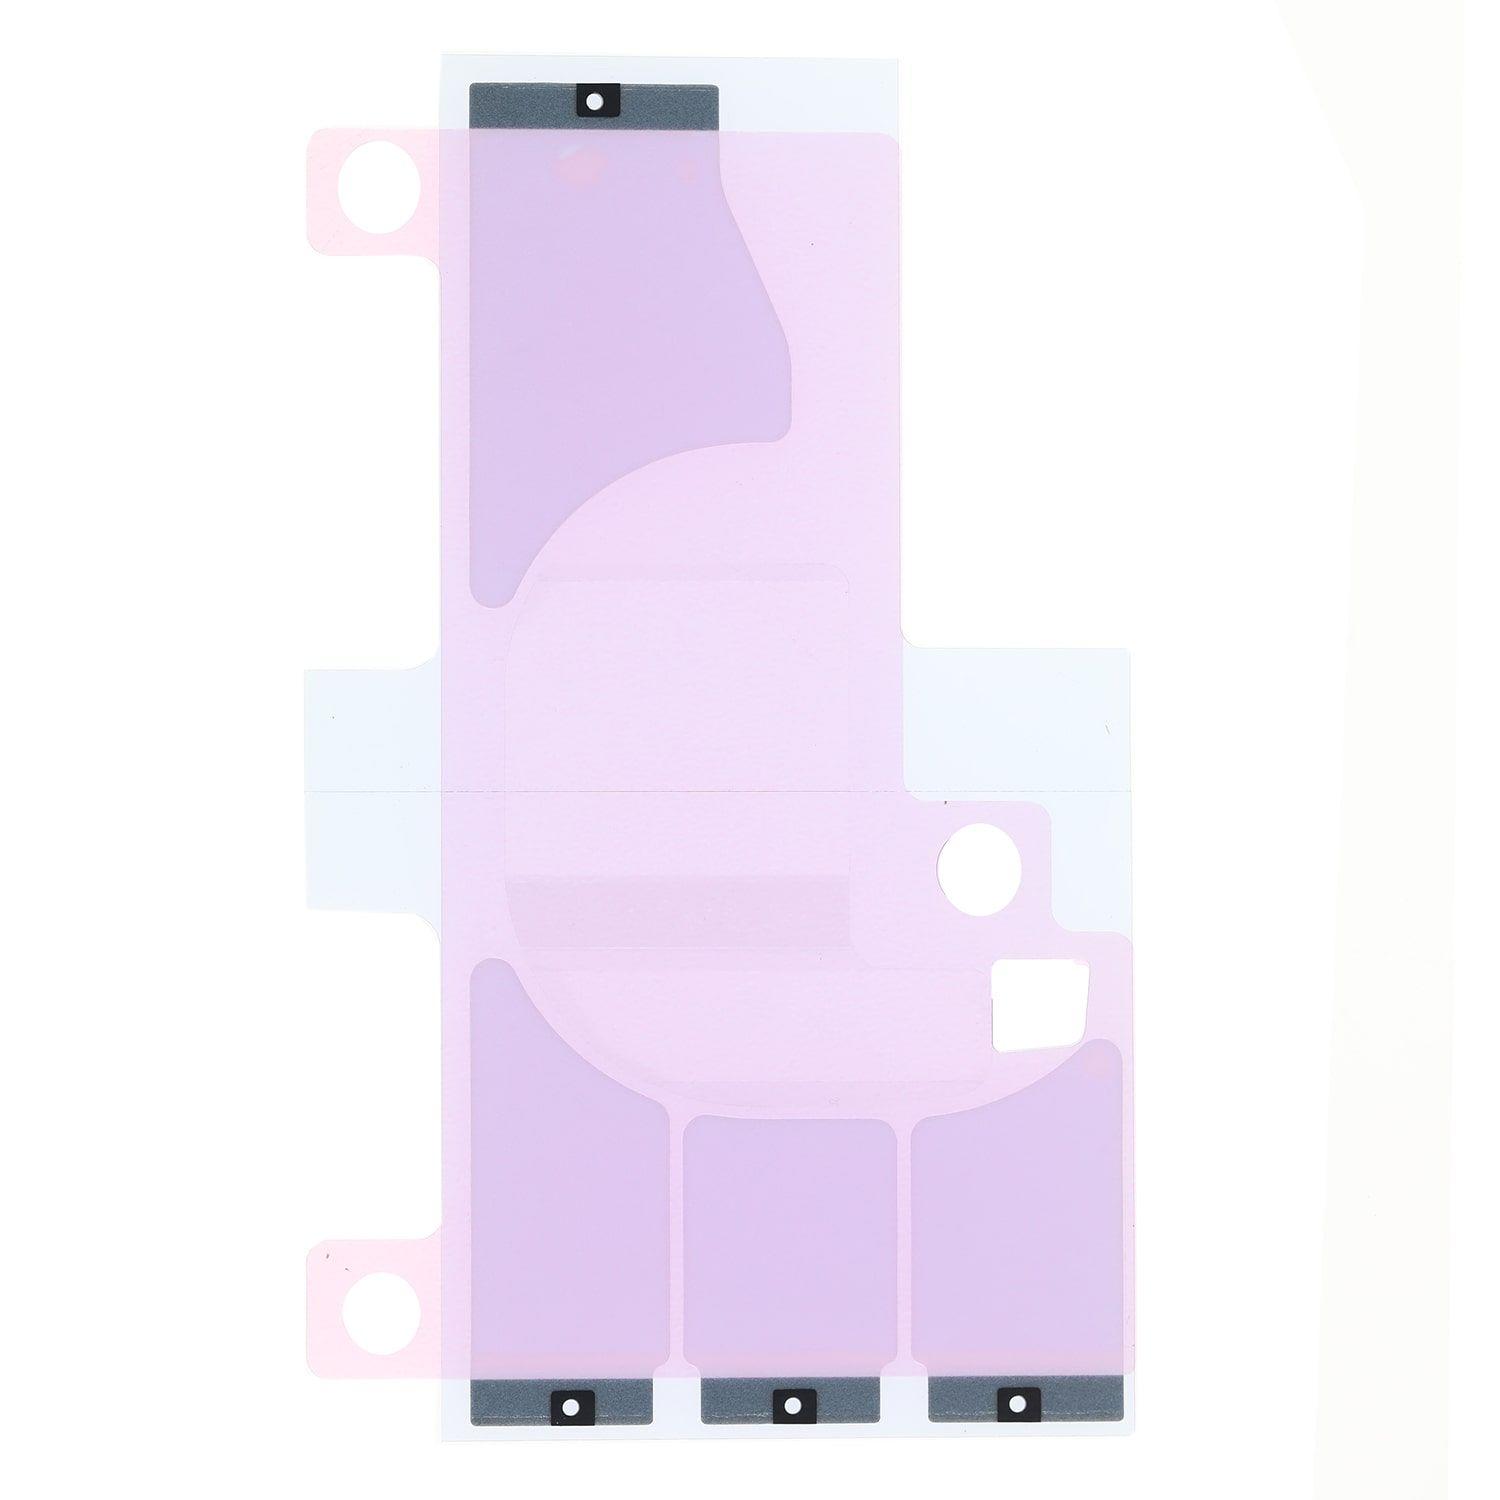 Montážní lepící páska iPhone XS Max